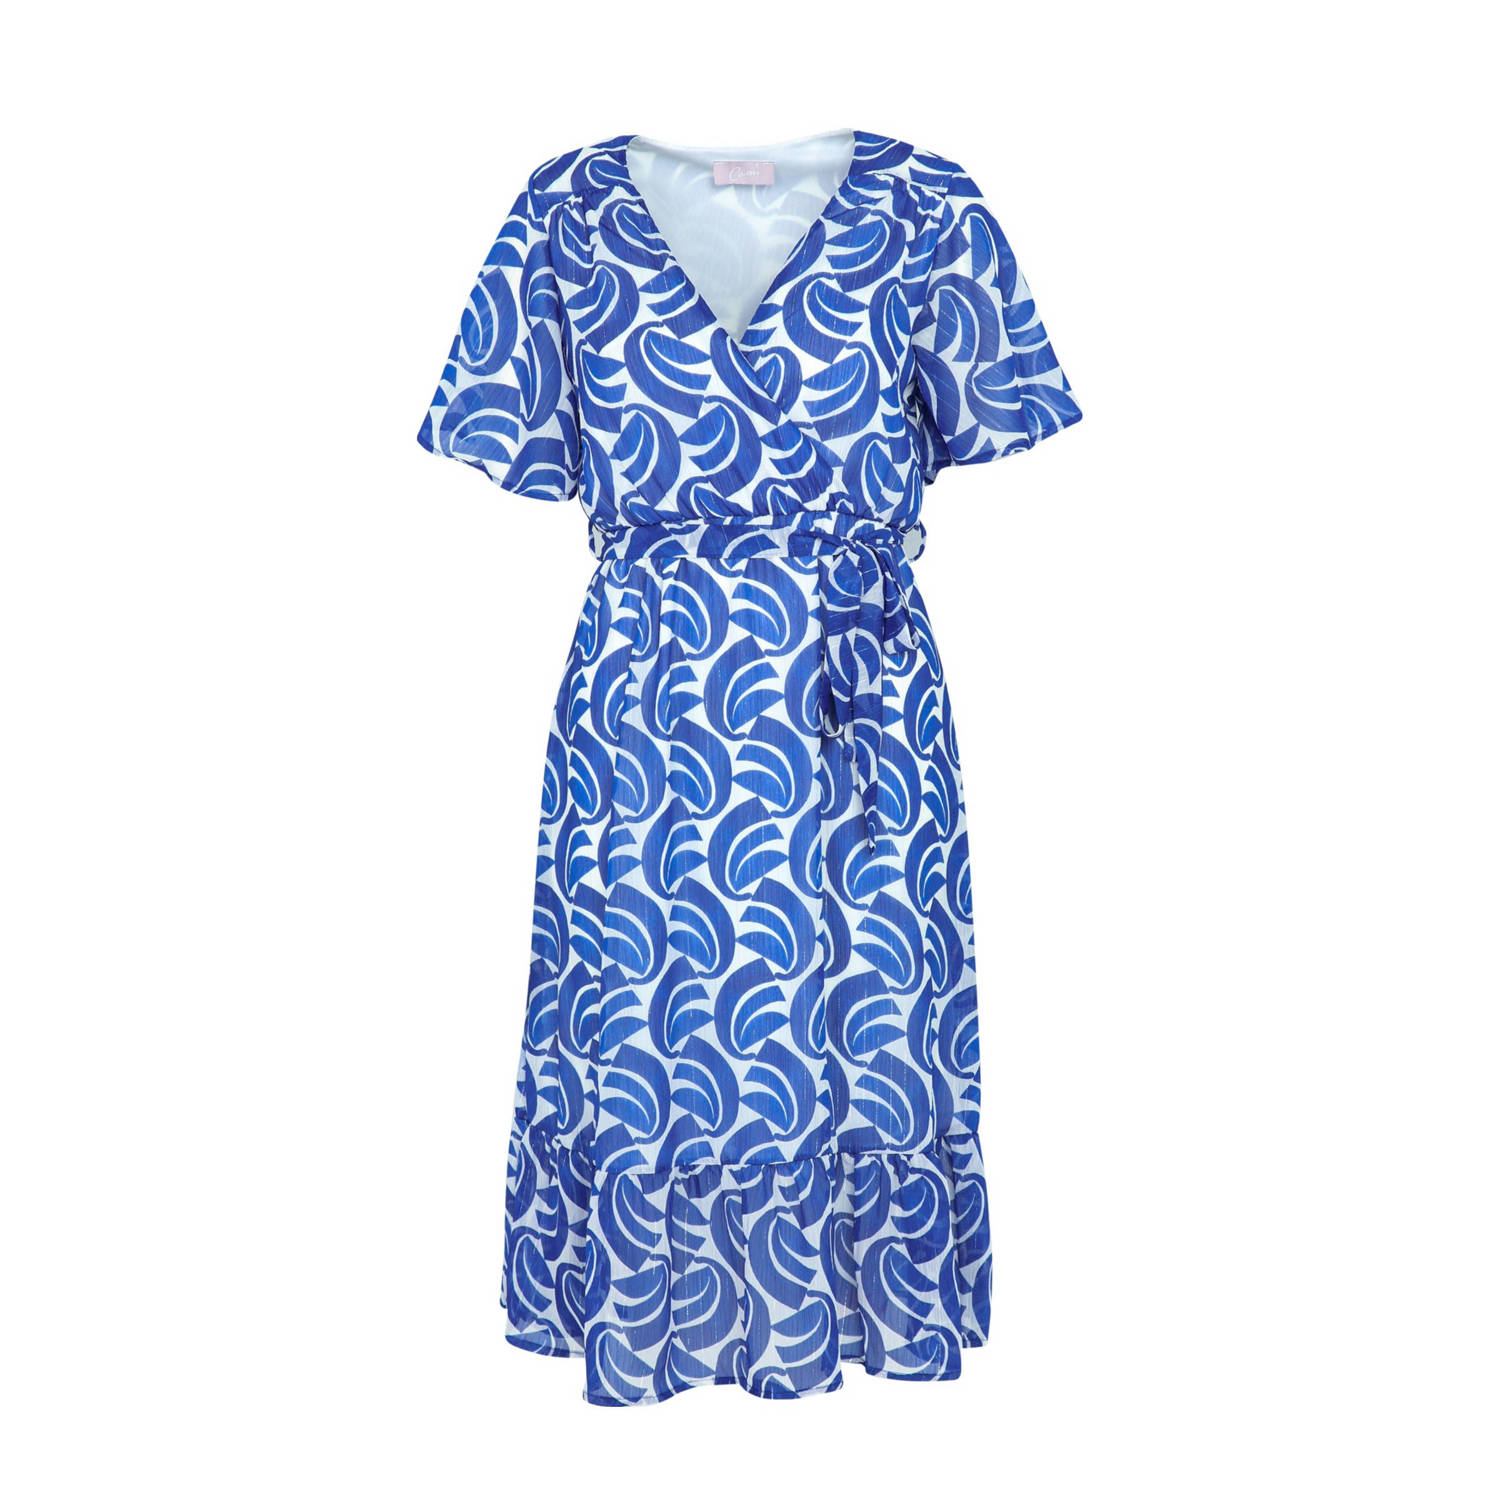 Cassis jurk met all over print blauw wit